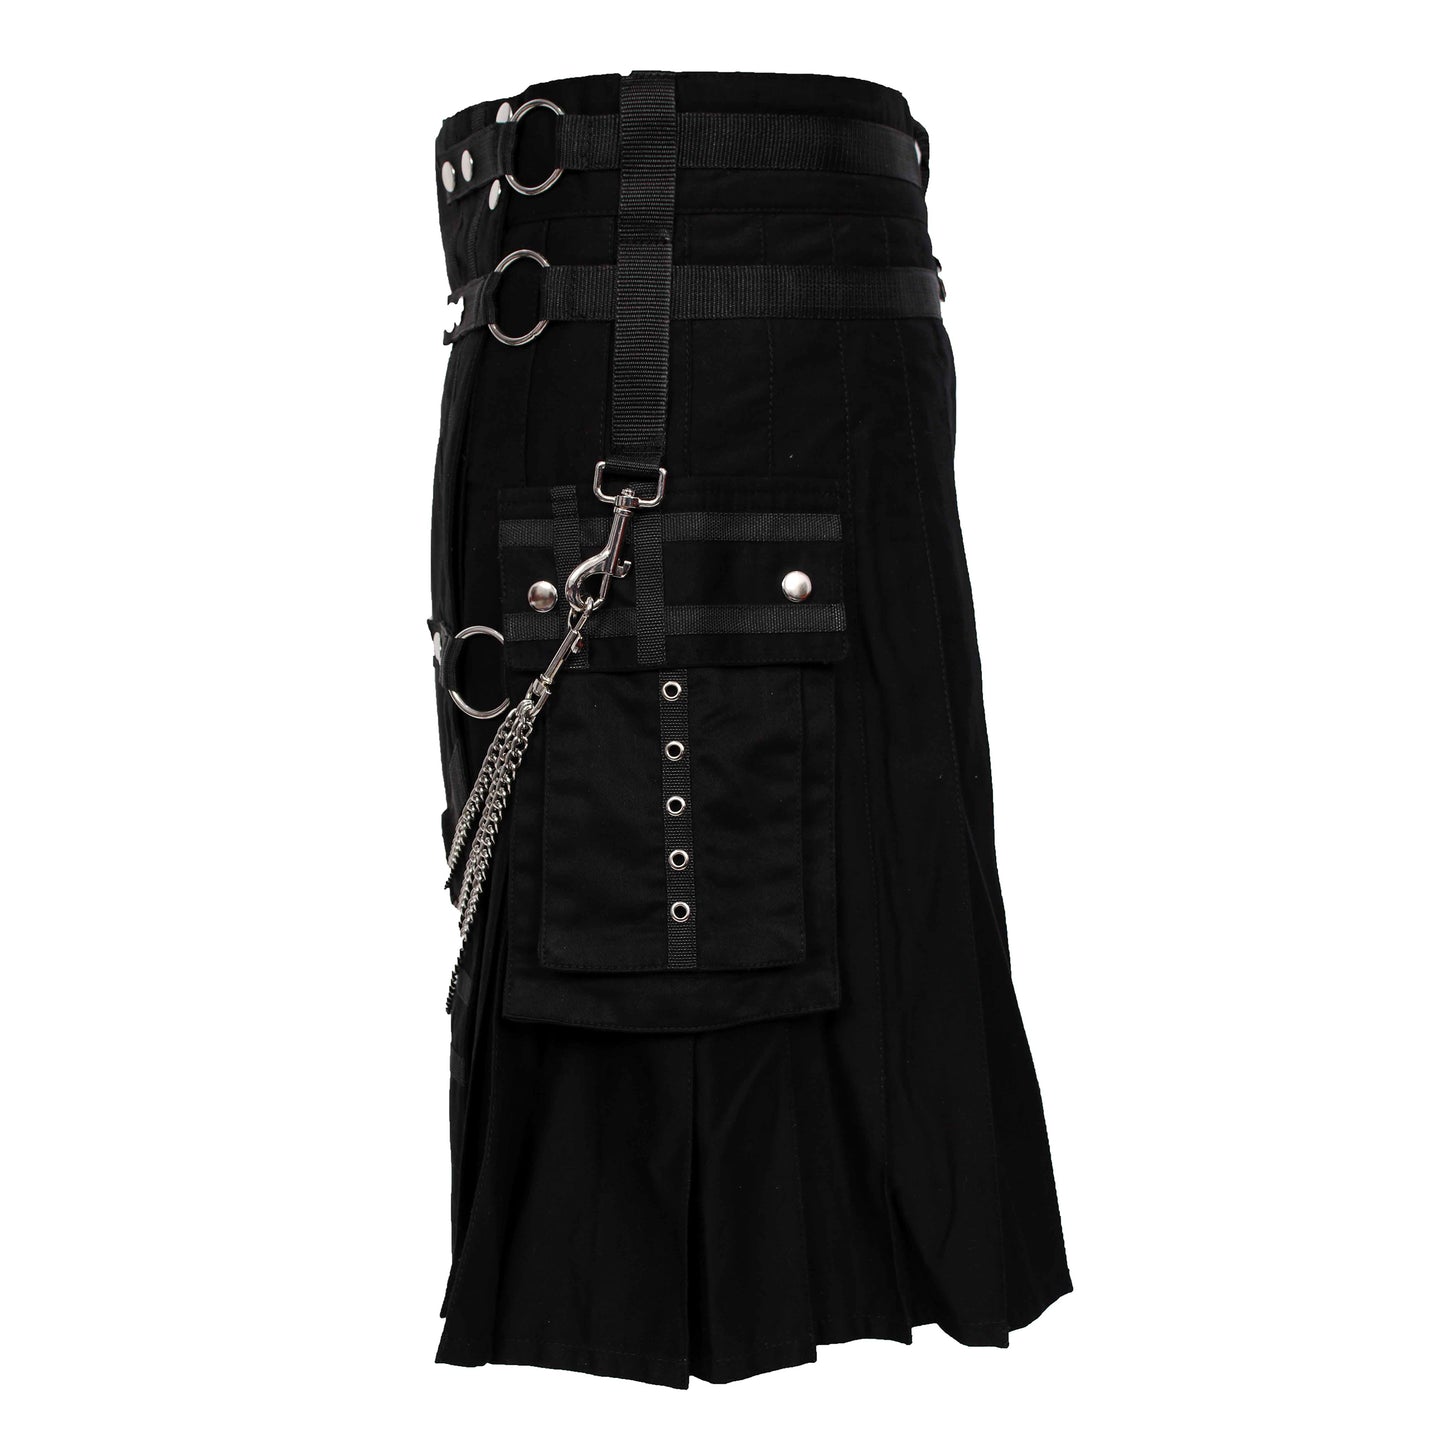 TRUESAGA - Black Deluxe Utility Fashion Kilt with Chain 100% Cotton 16-oz